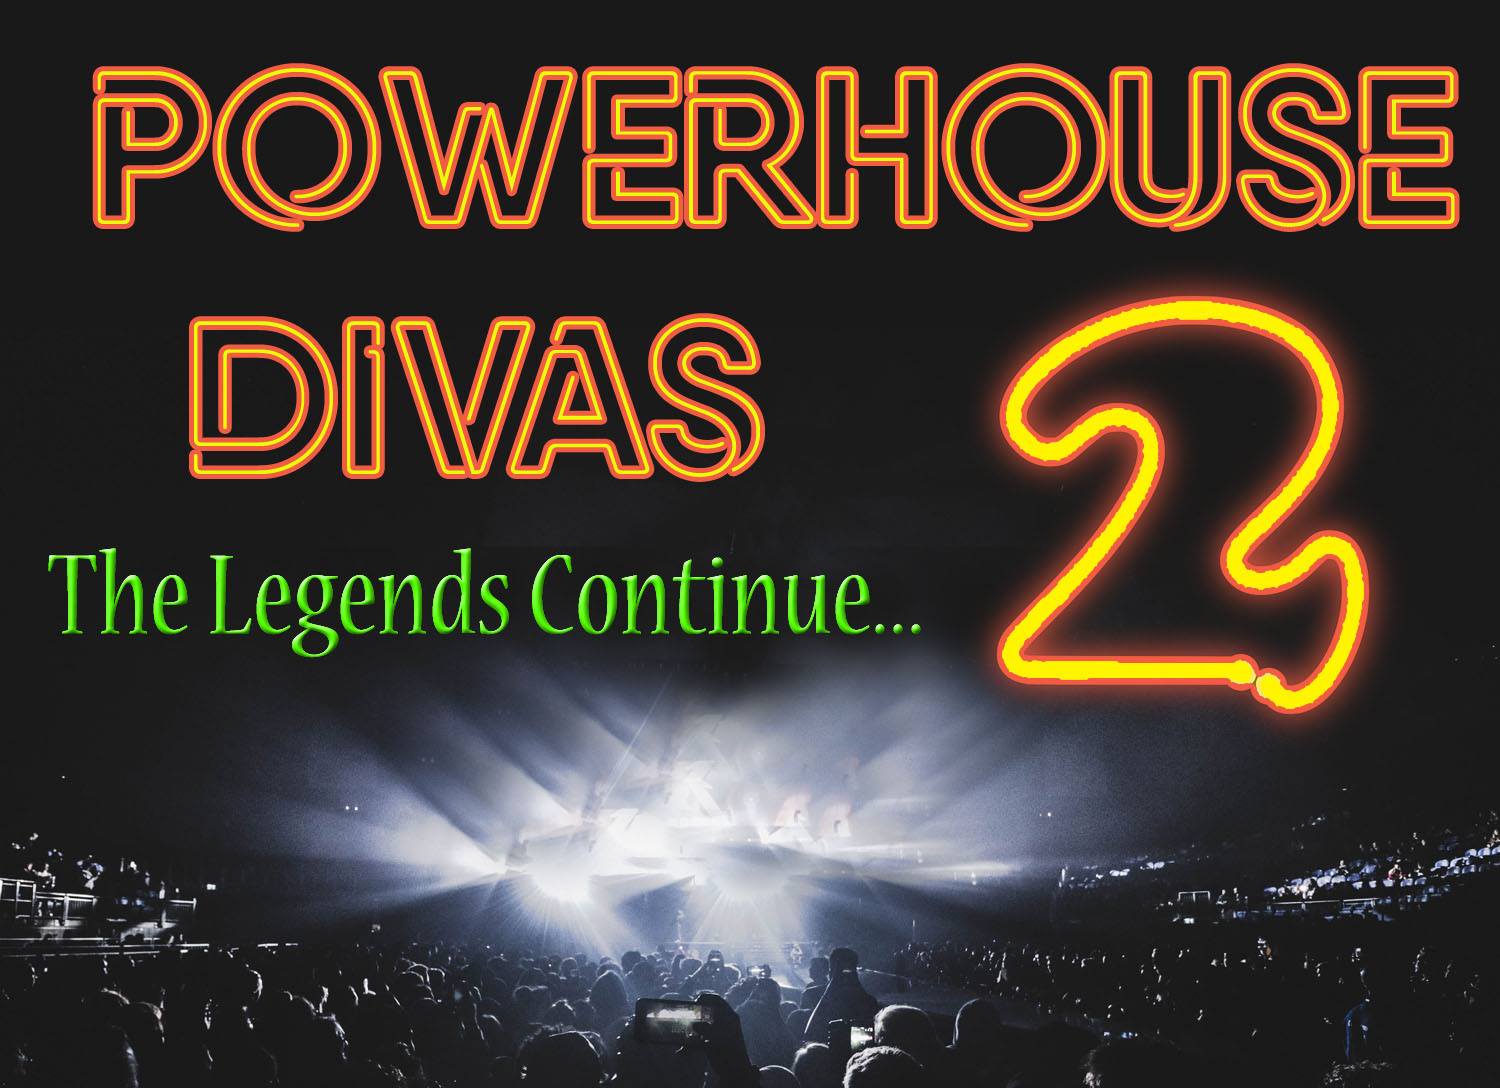 Powerhouse Divas 2 at Wallsend -